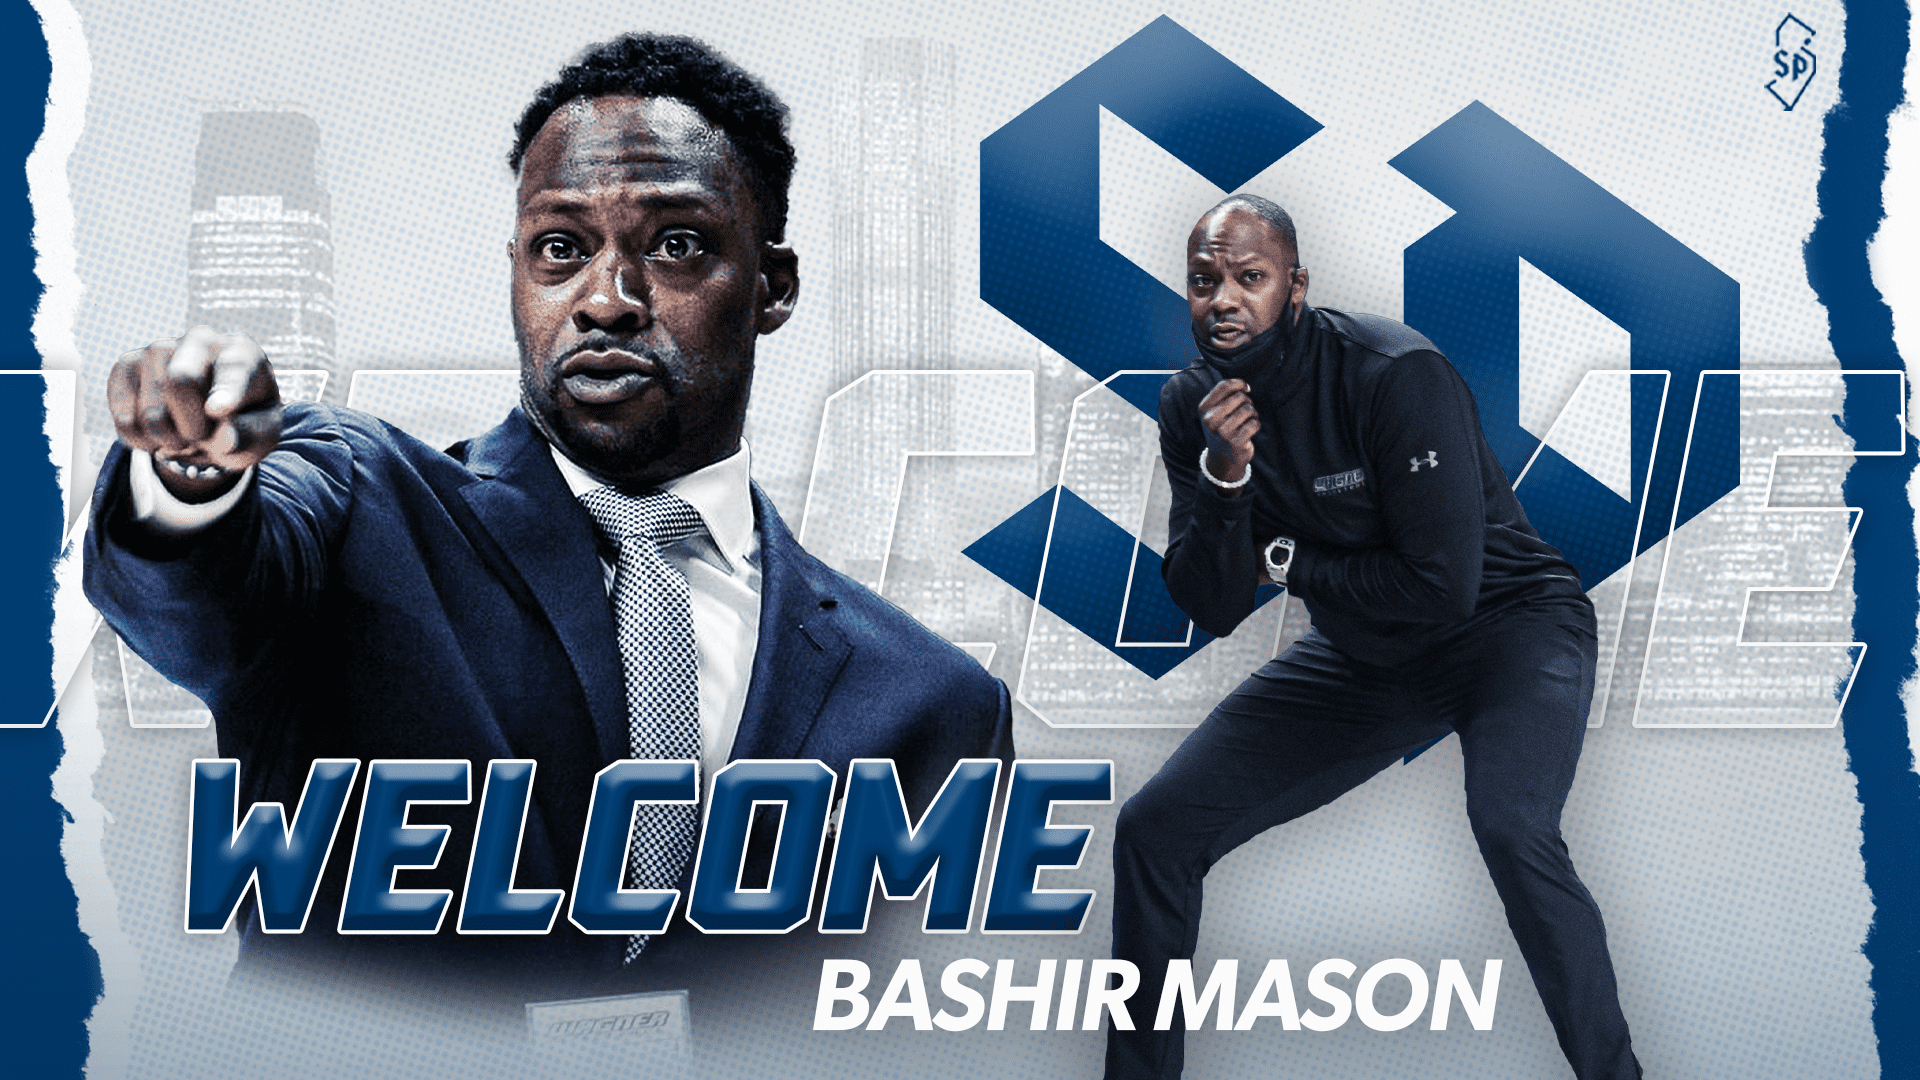 Saint Peter’s University Introduces Bashir Mason As Basketball Head Coach